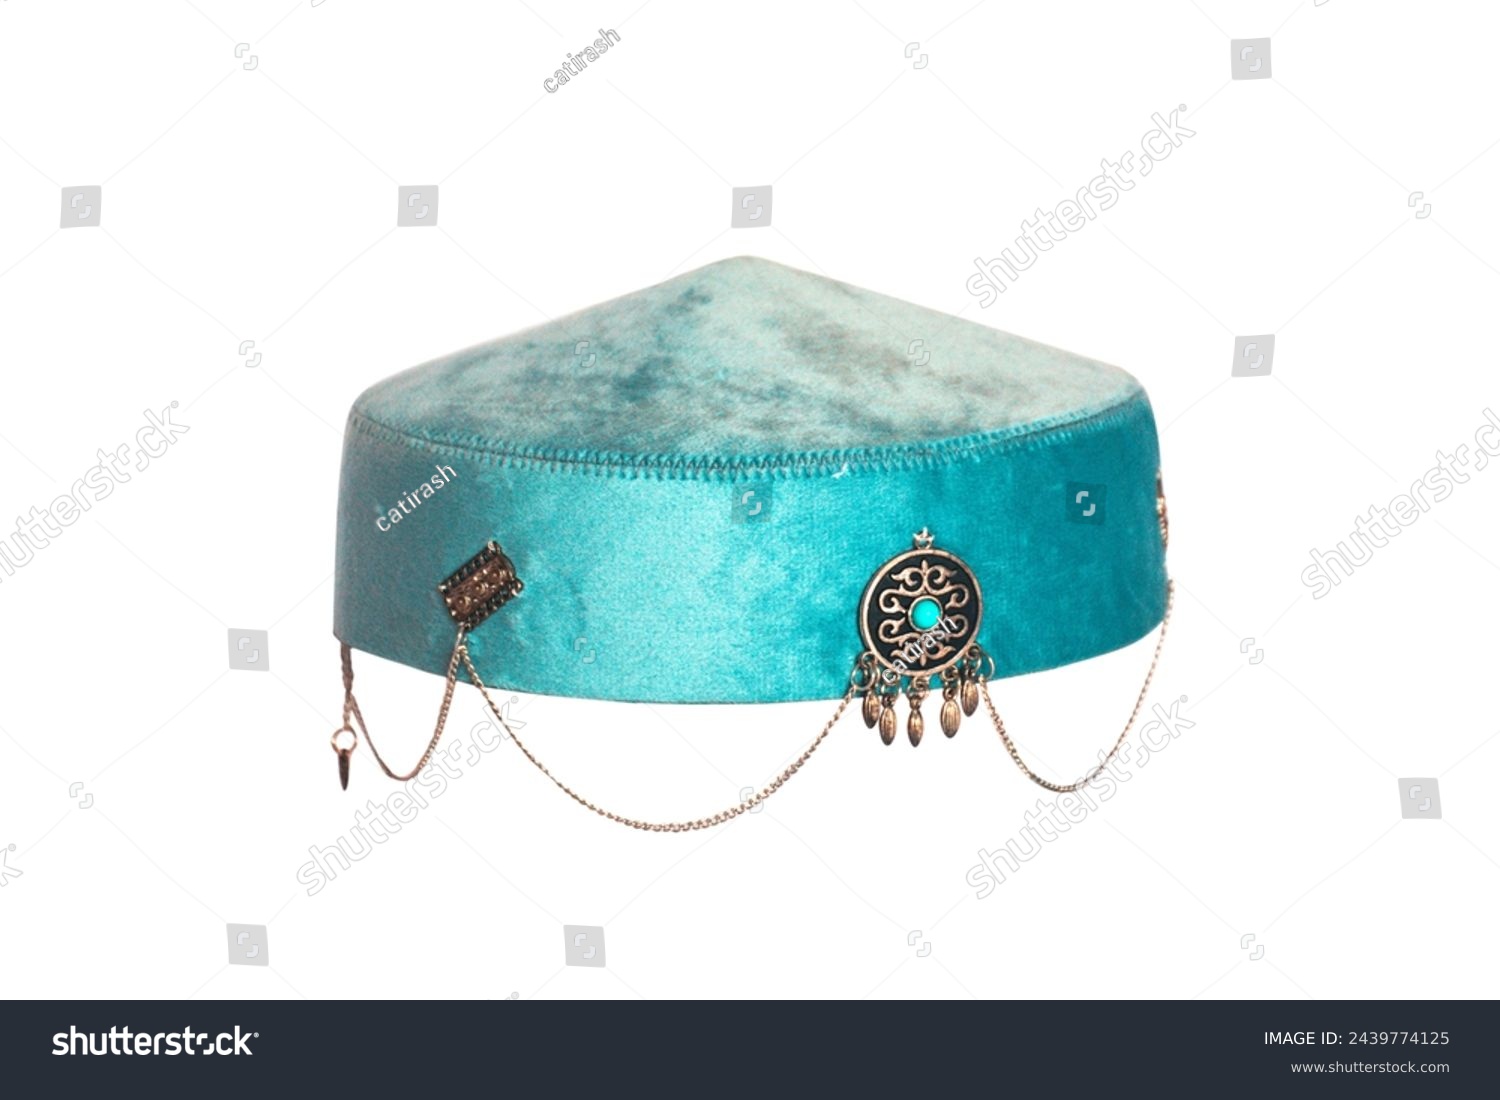 Kazakh national hat takiya or tubeteika - traditional Kazakh headwear. Modern qazaq hat. Traditional Kazakh headwear isolated on white background. #2439774125